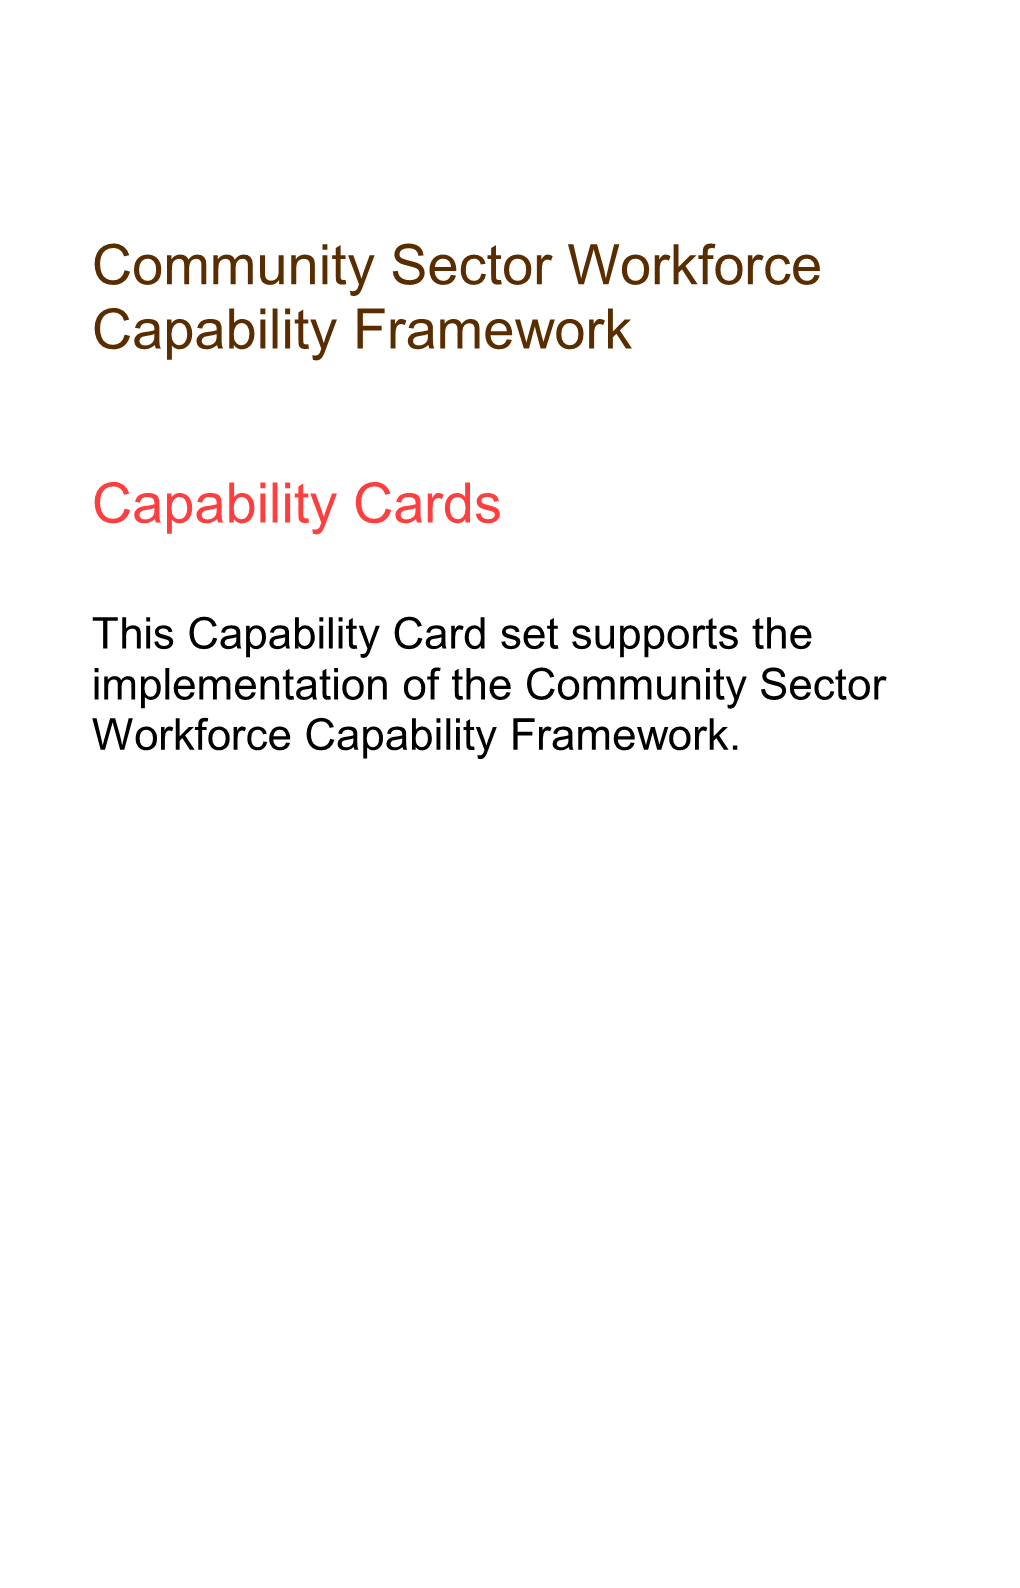 Workforce-Capability-Framework-Cards (Word)